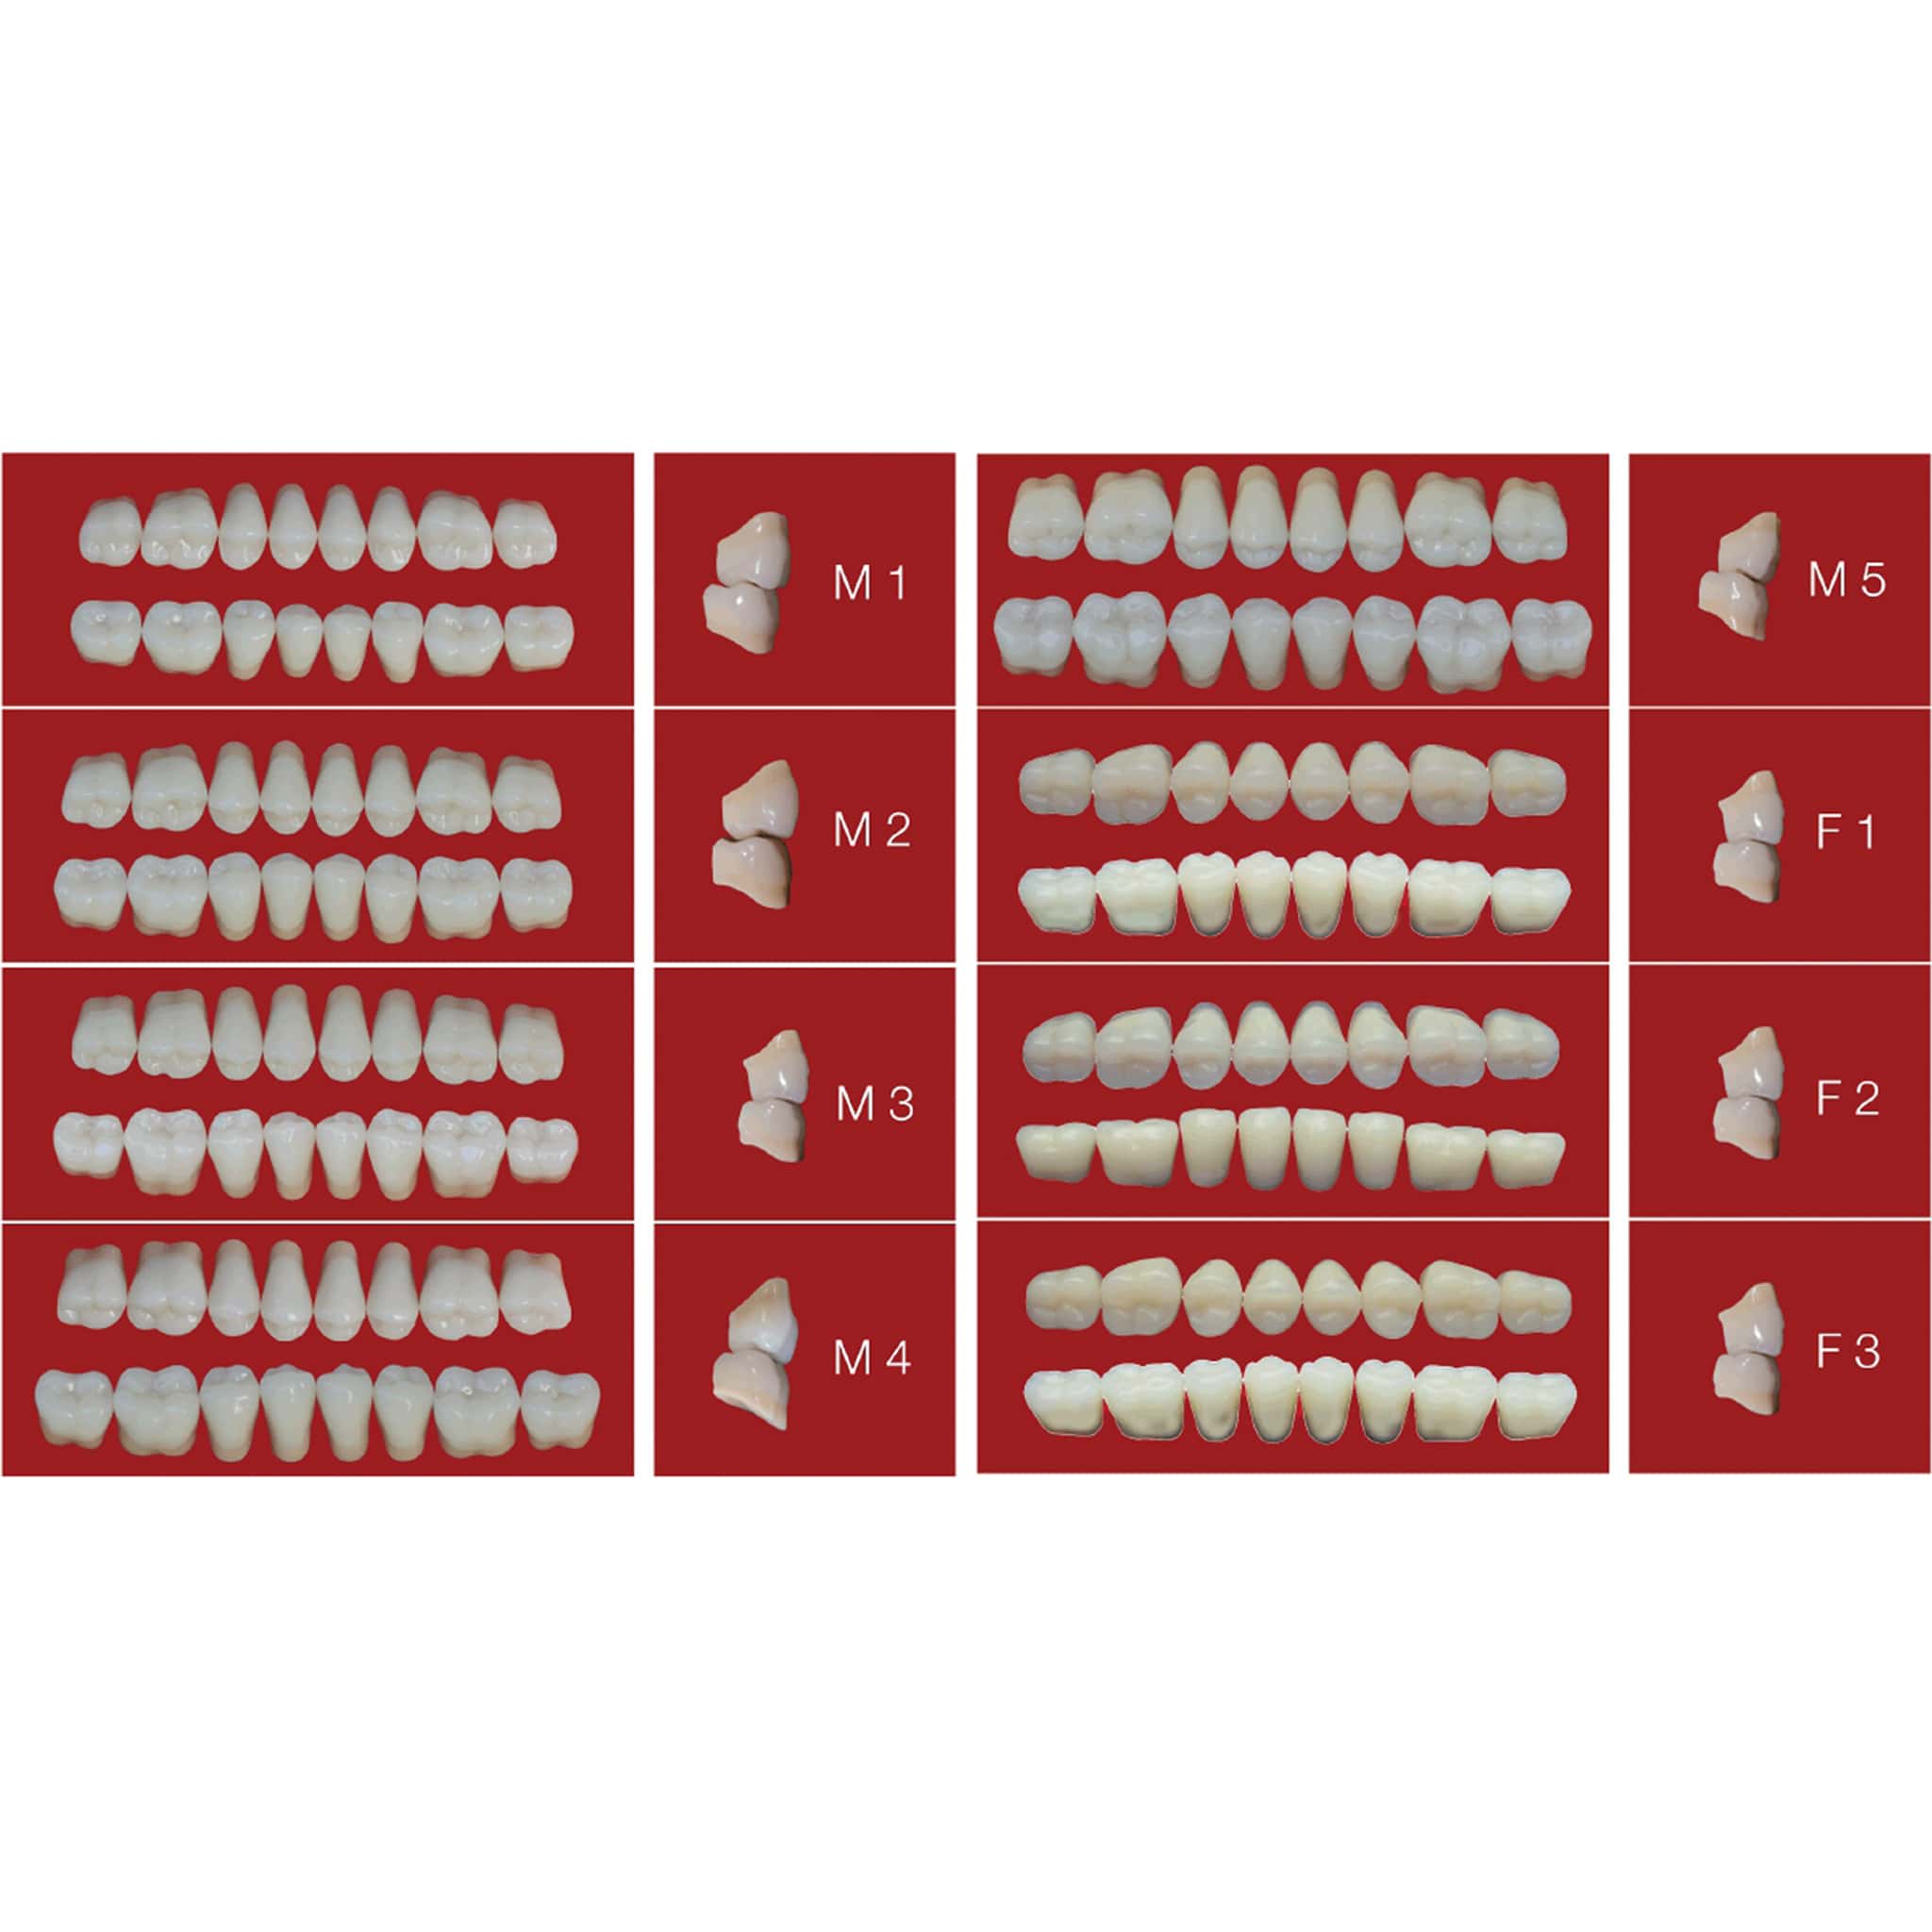 MR Dental Medi-Lux Full Set A1 Shade (Box of 4)